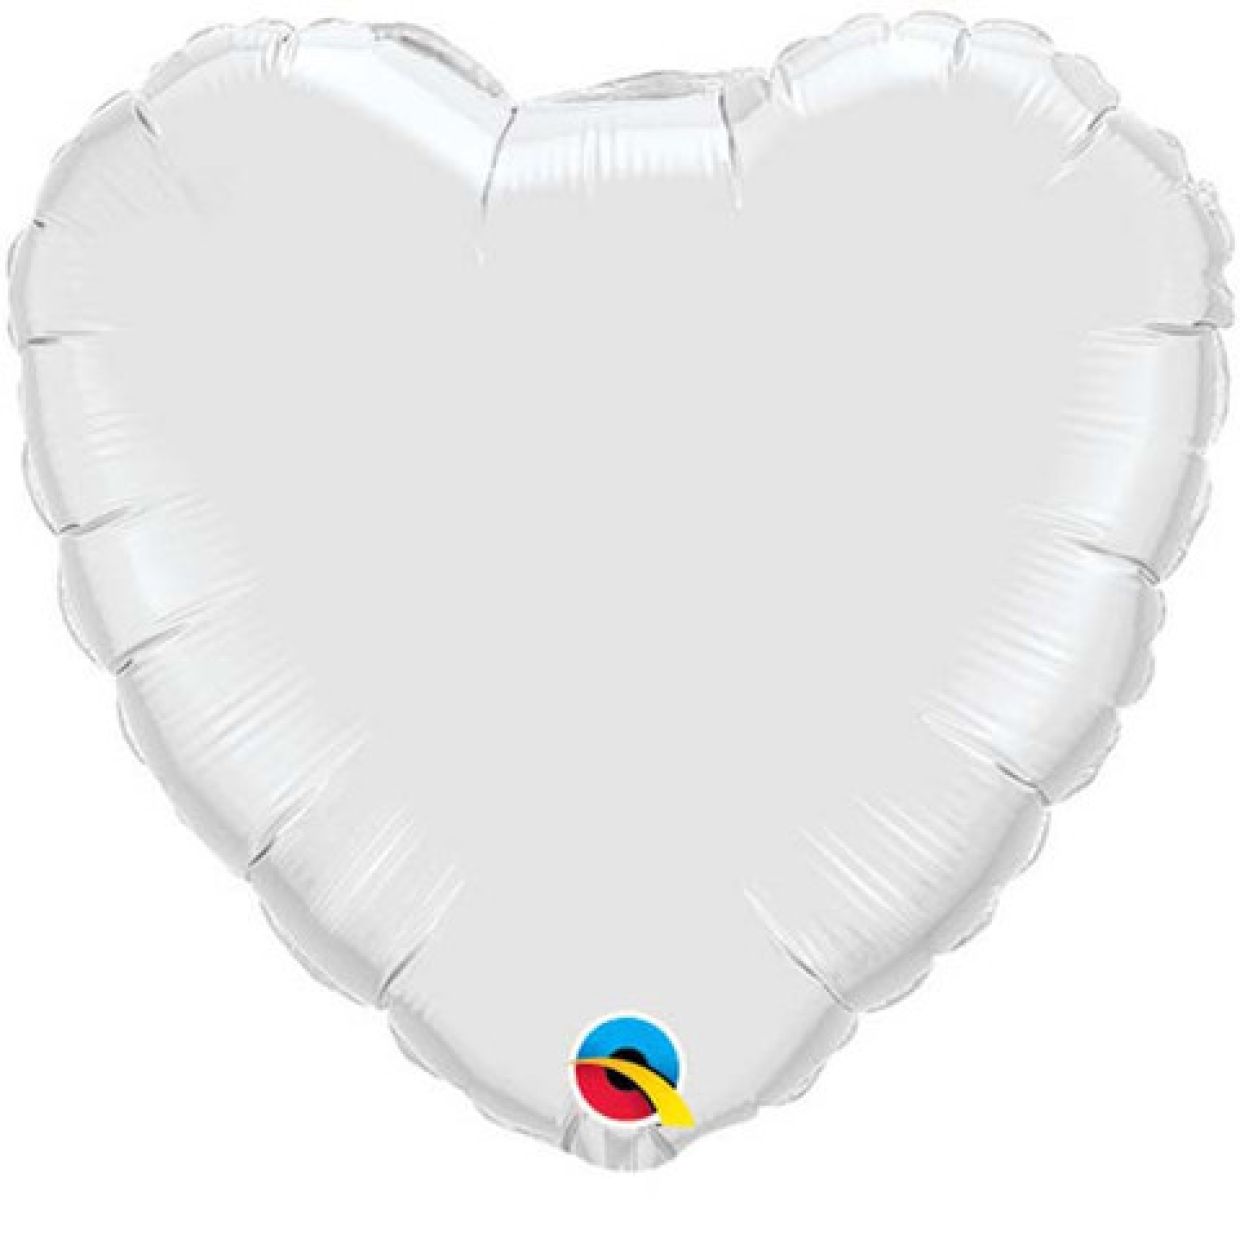 Jumbo White Heart Shape Foil Balloon